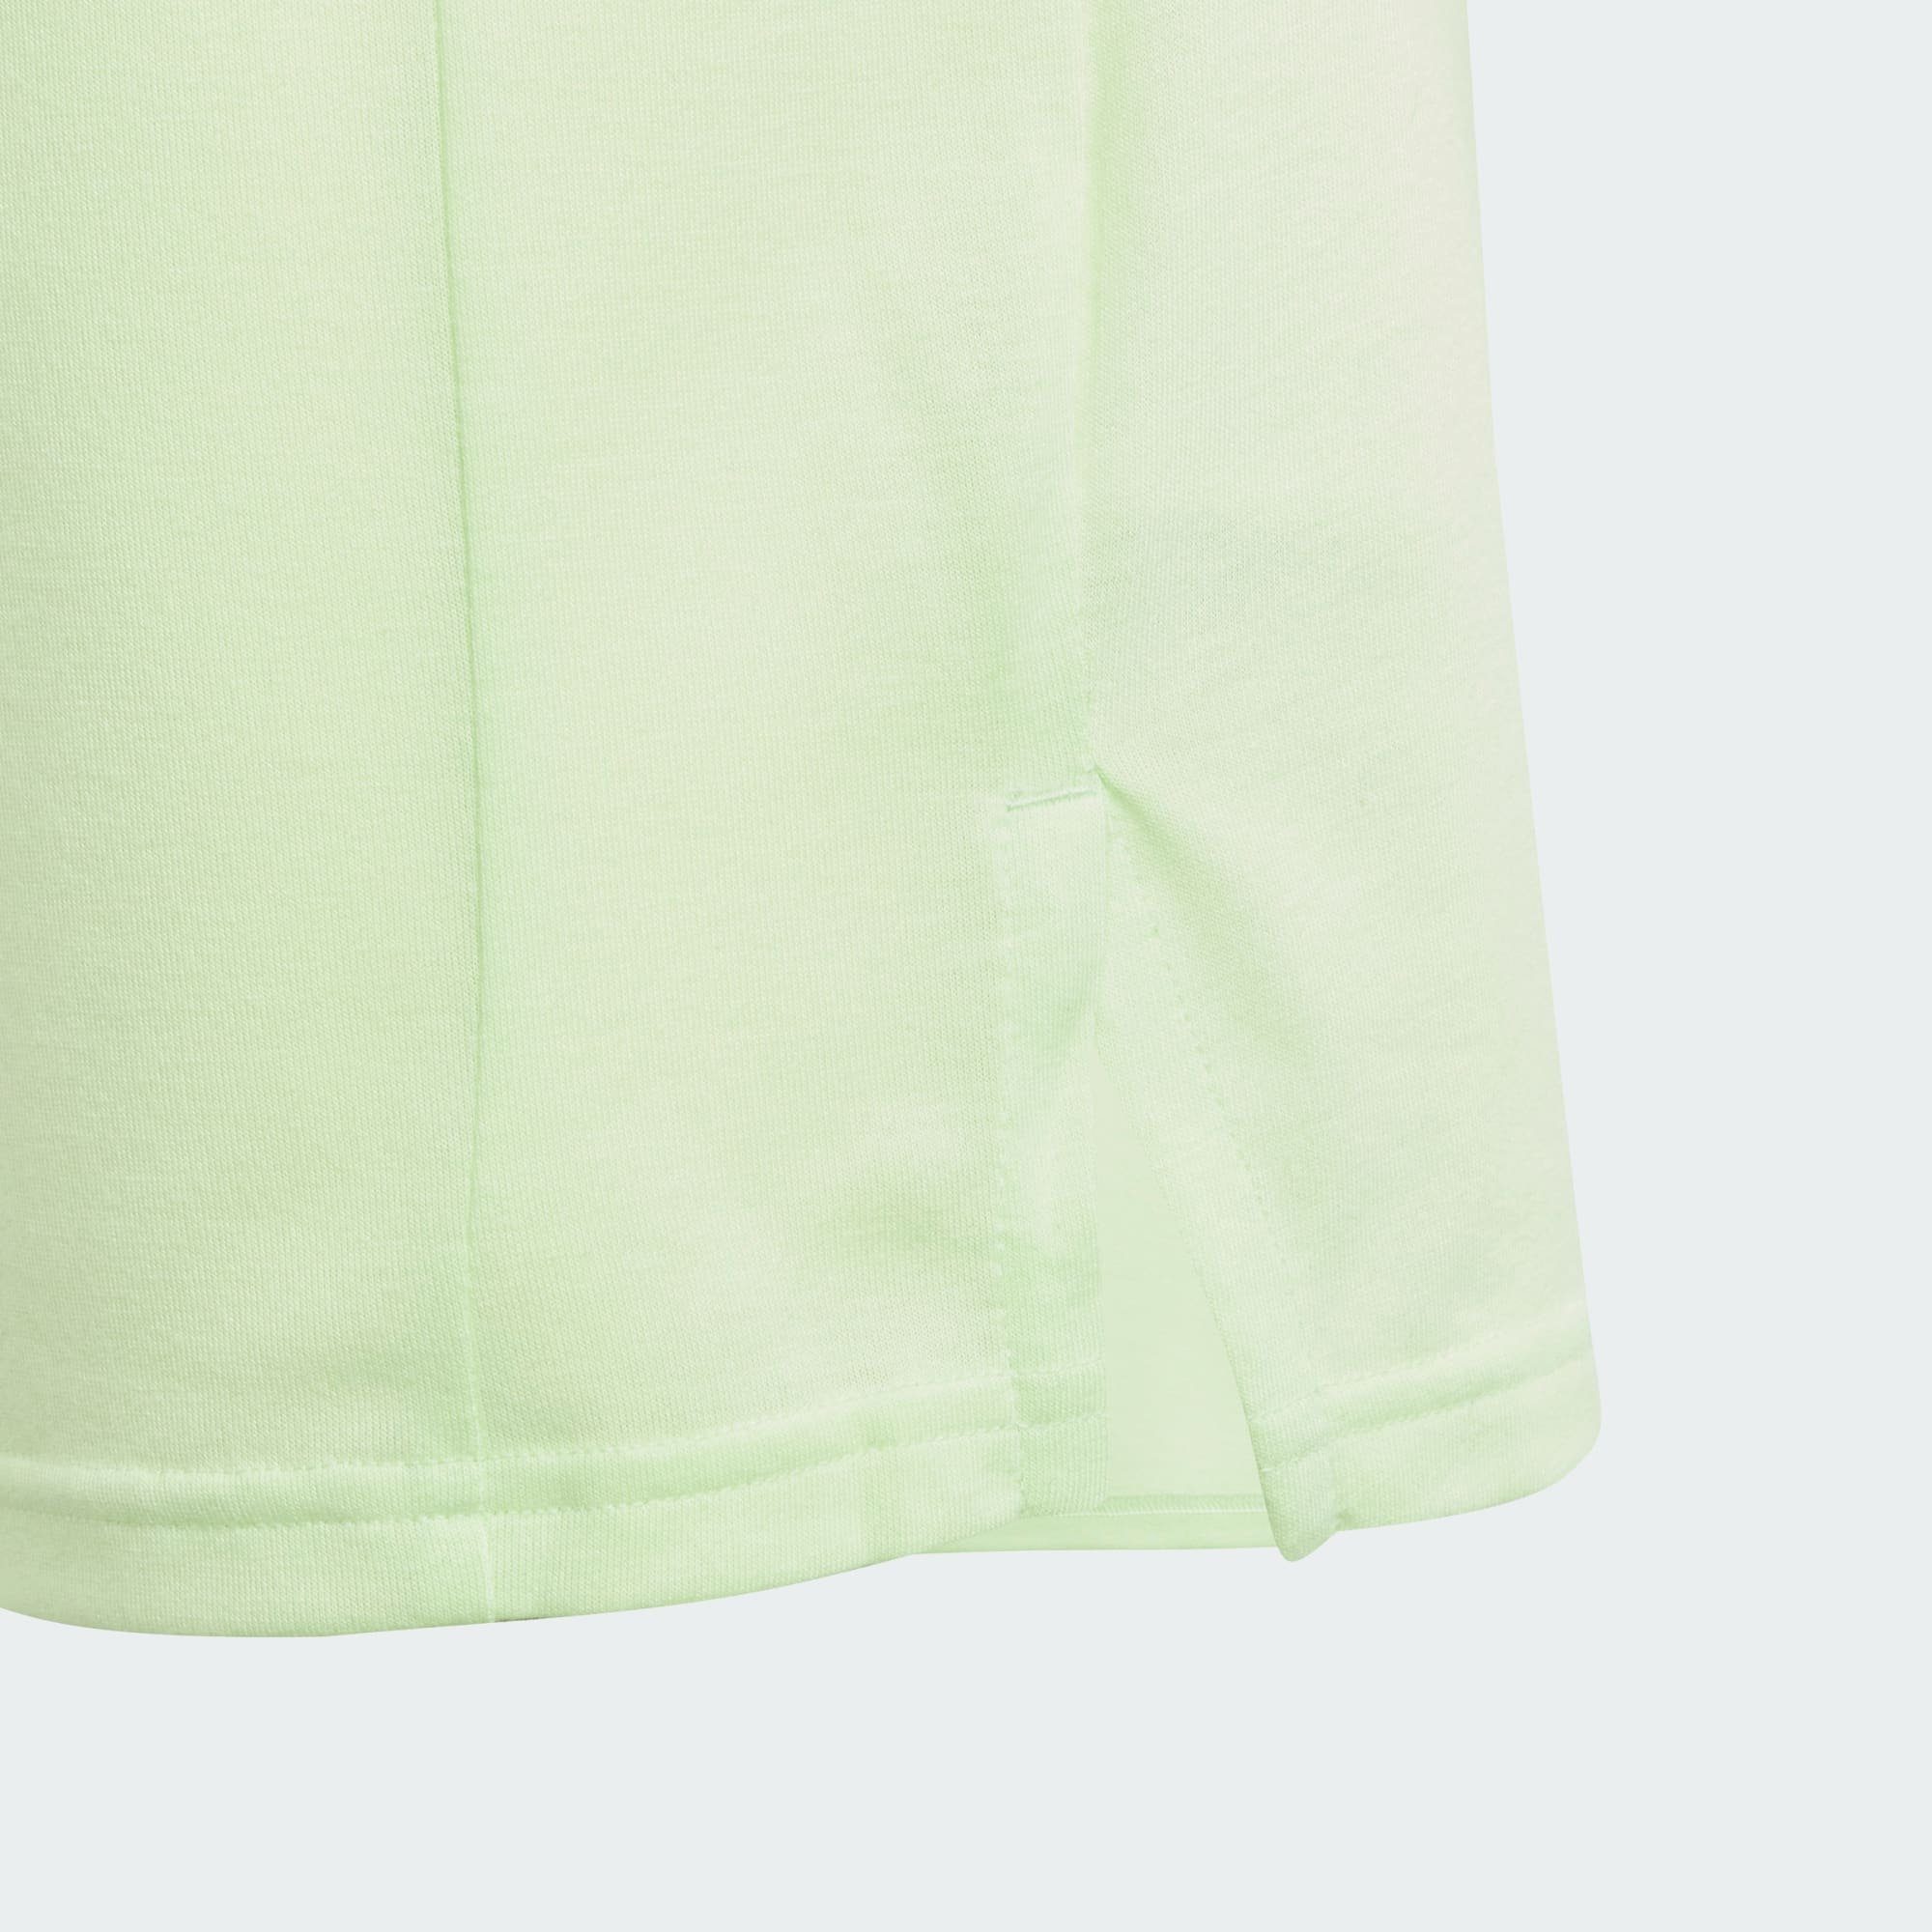 KIDS Reflective Green TRAINING T-SHIRT / T-Shirt AEROREADY Spark Silver Semi adidas Performance